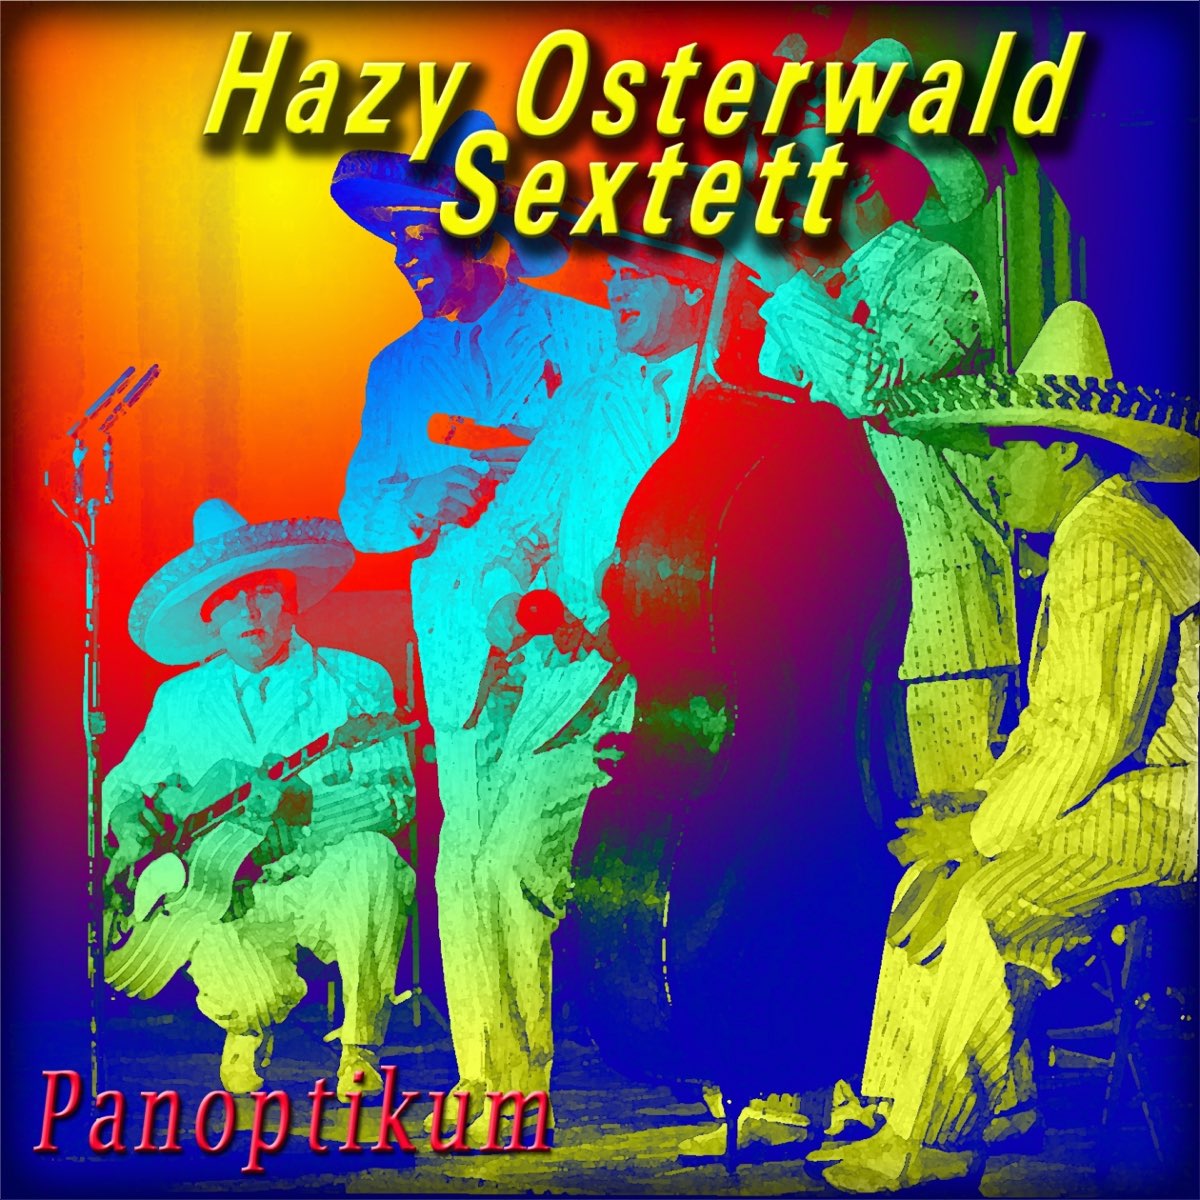 Panoptikum Album Von Hazy Osterwald Sextett Apple Music